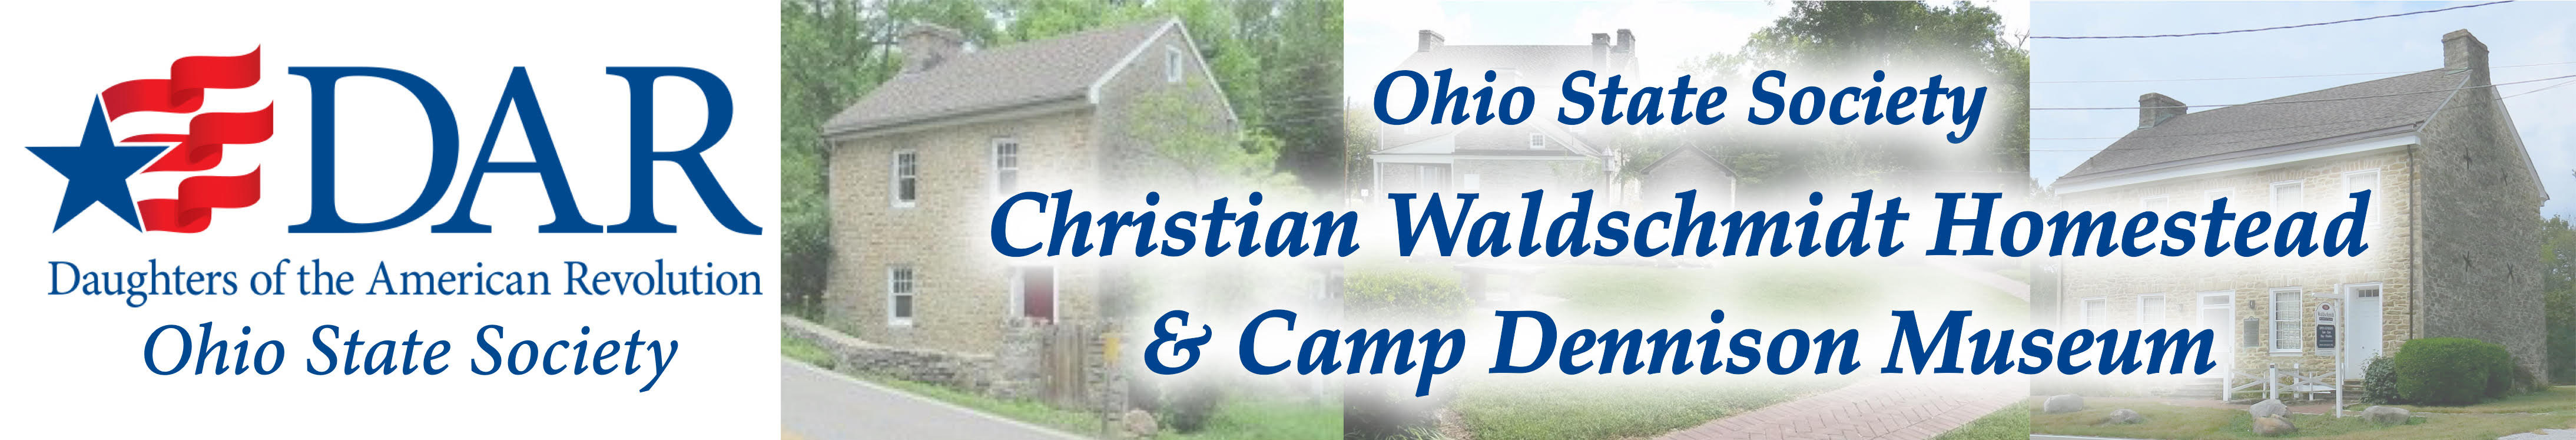 Christian Waldschmidt Homestead & Camp Dennison